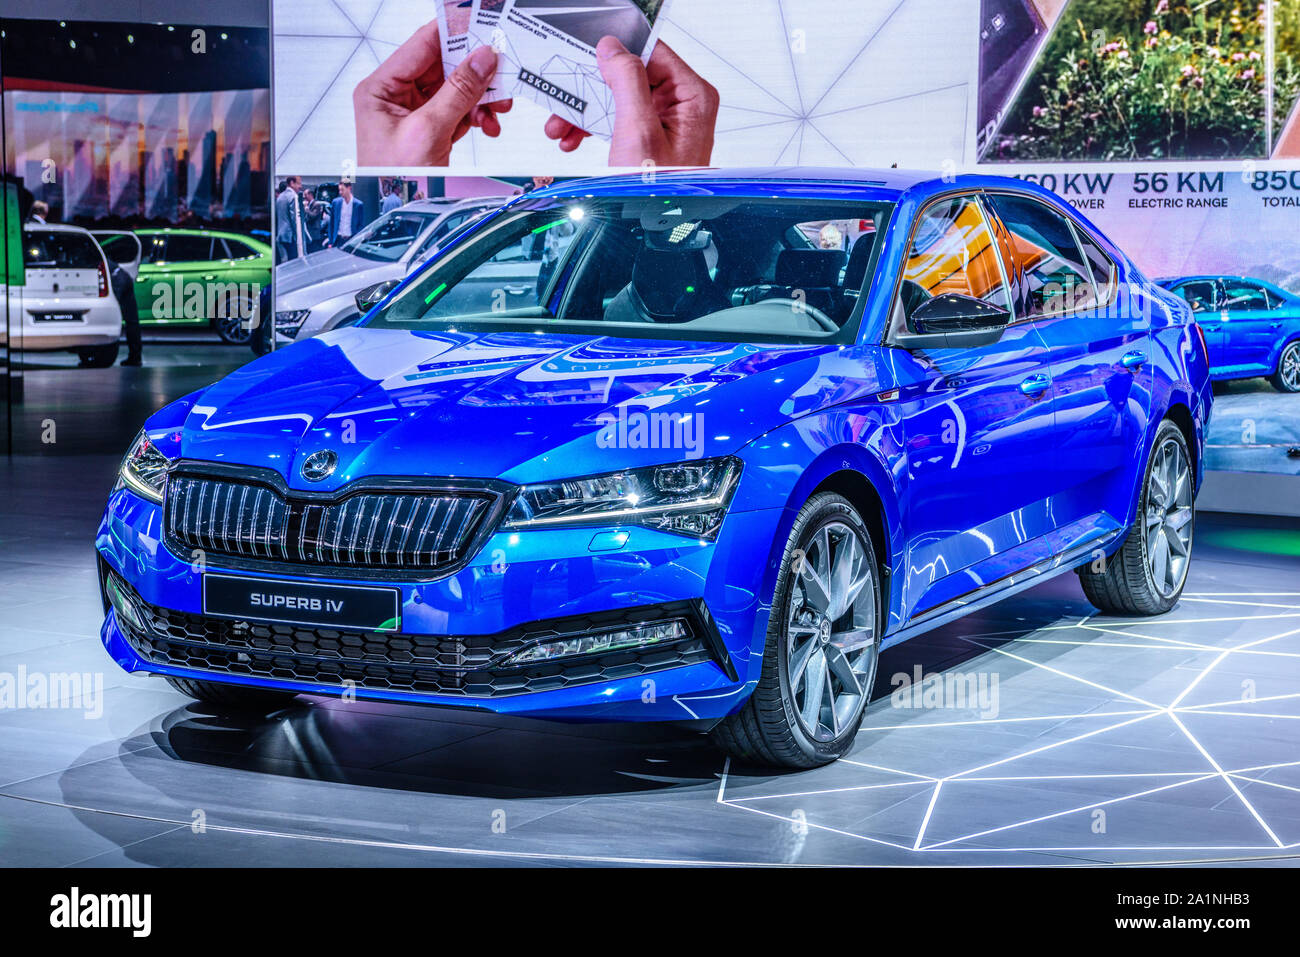 https://c8.alamy.com/comp/2A1NHB3/frankfurt-germany-sept-2019-blue-skoda-superb-iv-b8-typ-3v-sedan-car-iaa-international-motor-show-auto-exhibtion-2A1NHB3.jpg